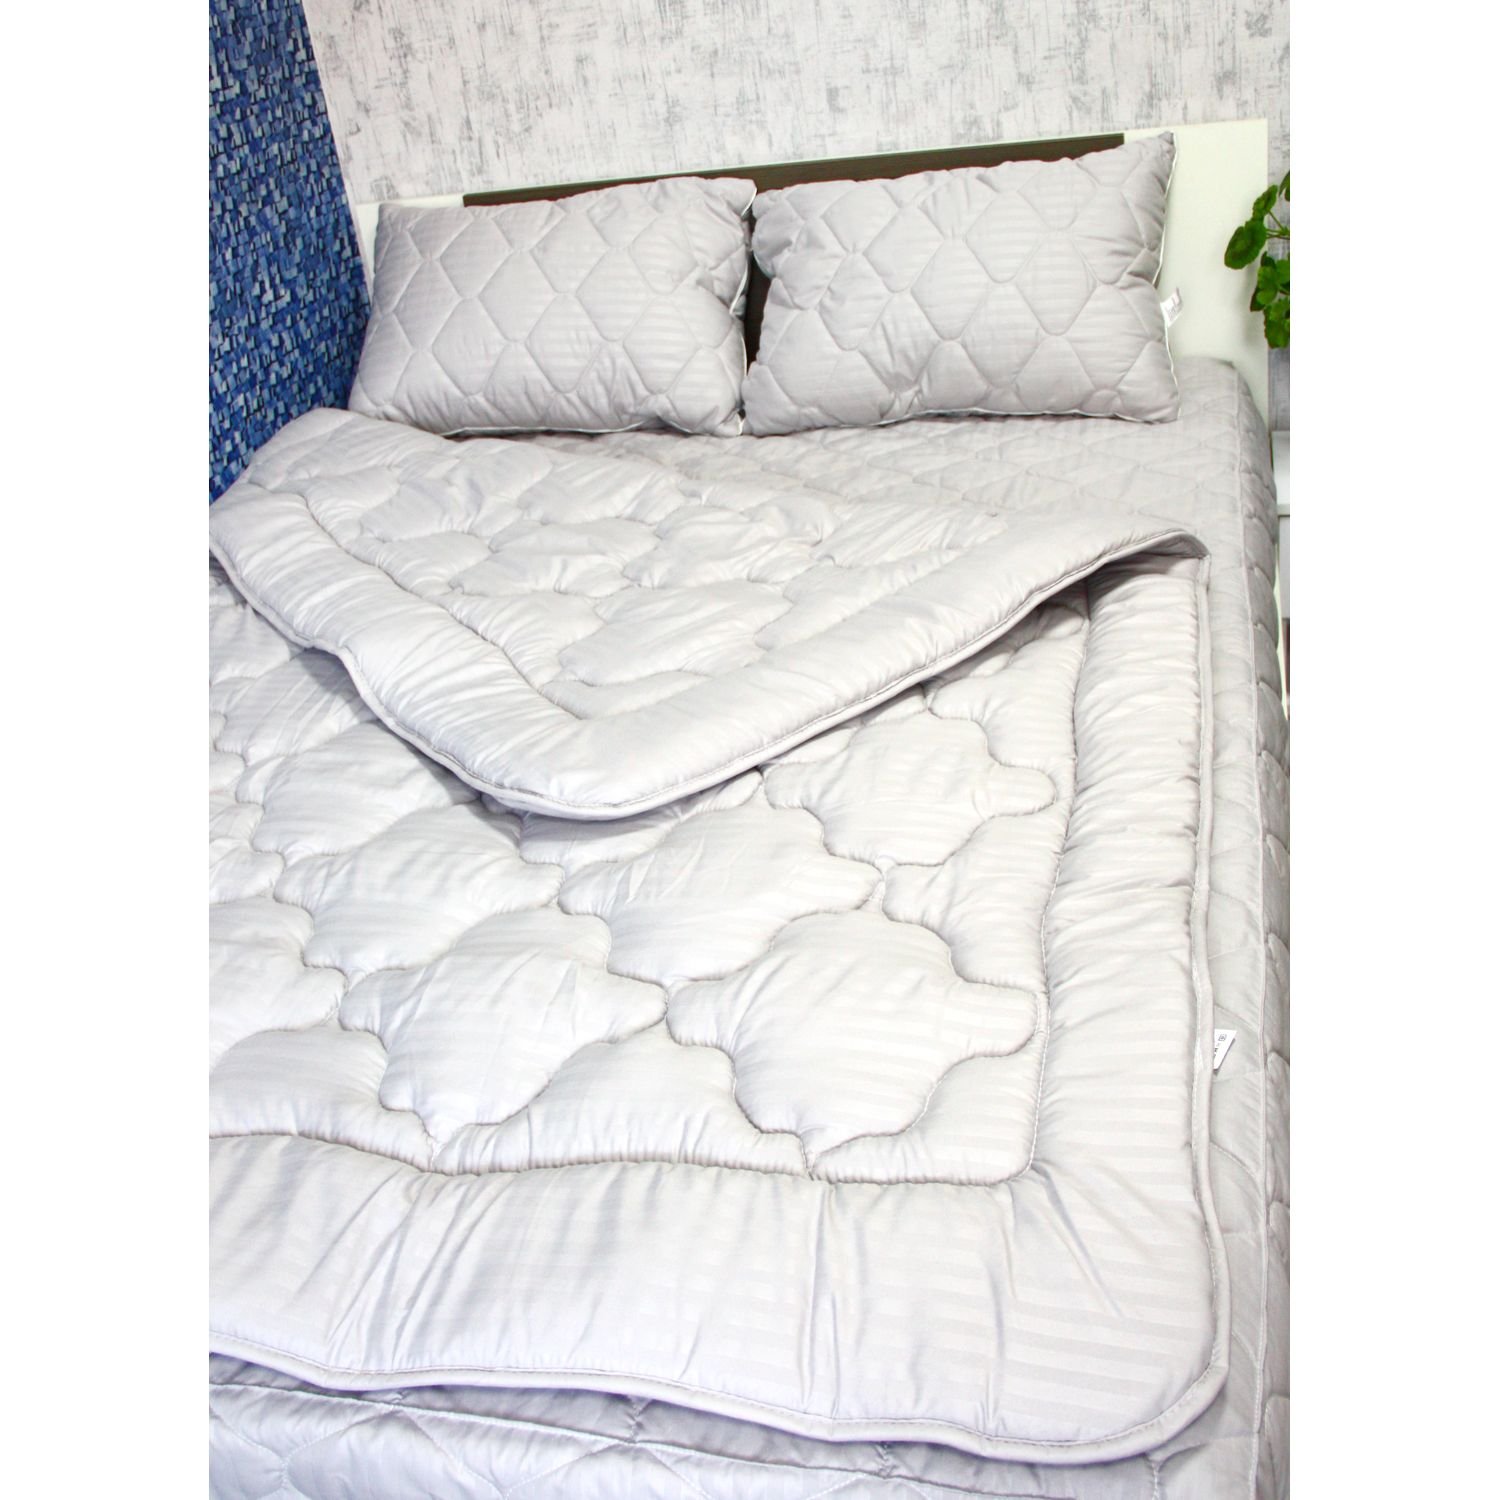 Одеяло LightHouse Soft Line Mf Stripe grey, 140х210 см, серое (602244) - фото 6